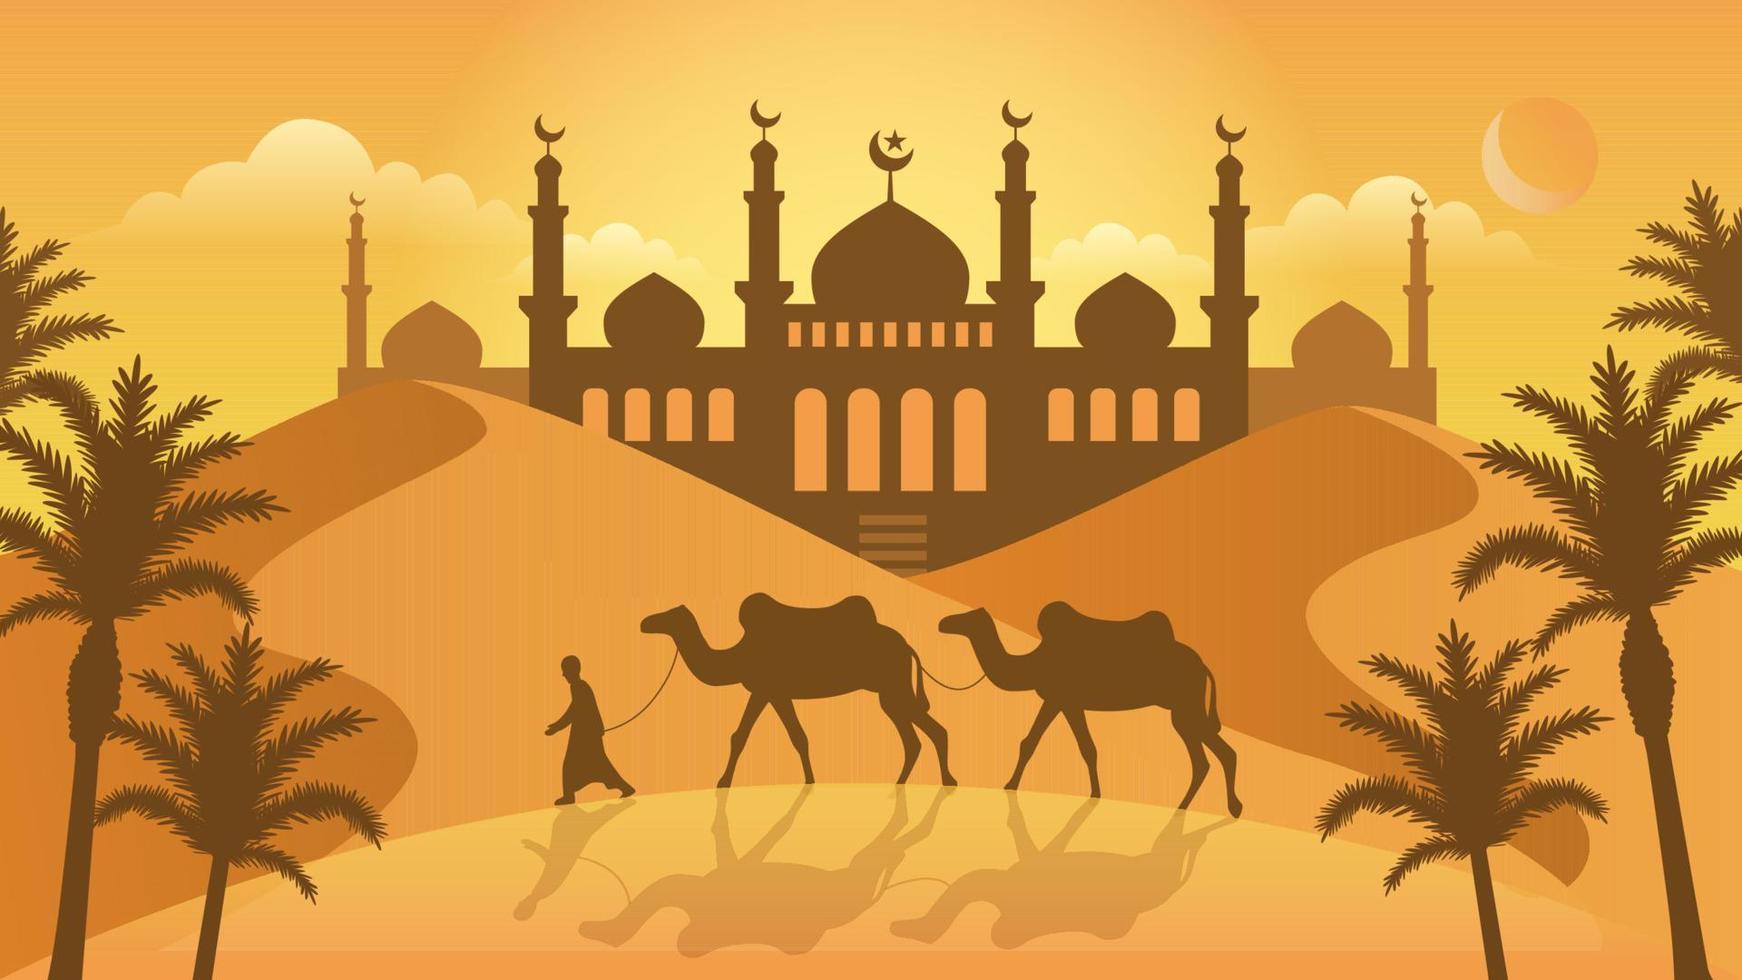 Desert and Mosque Background vector